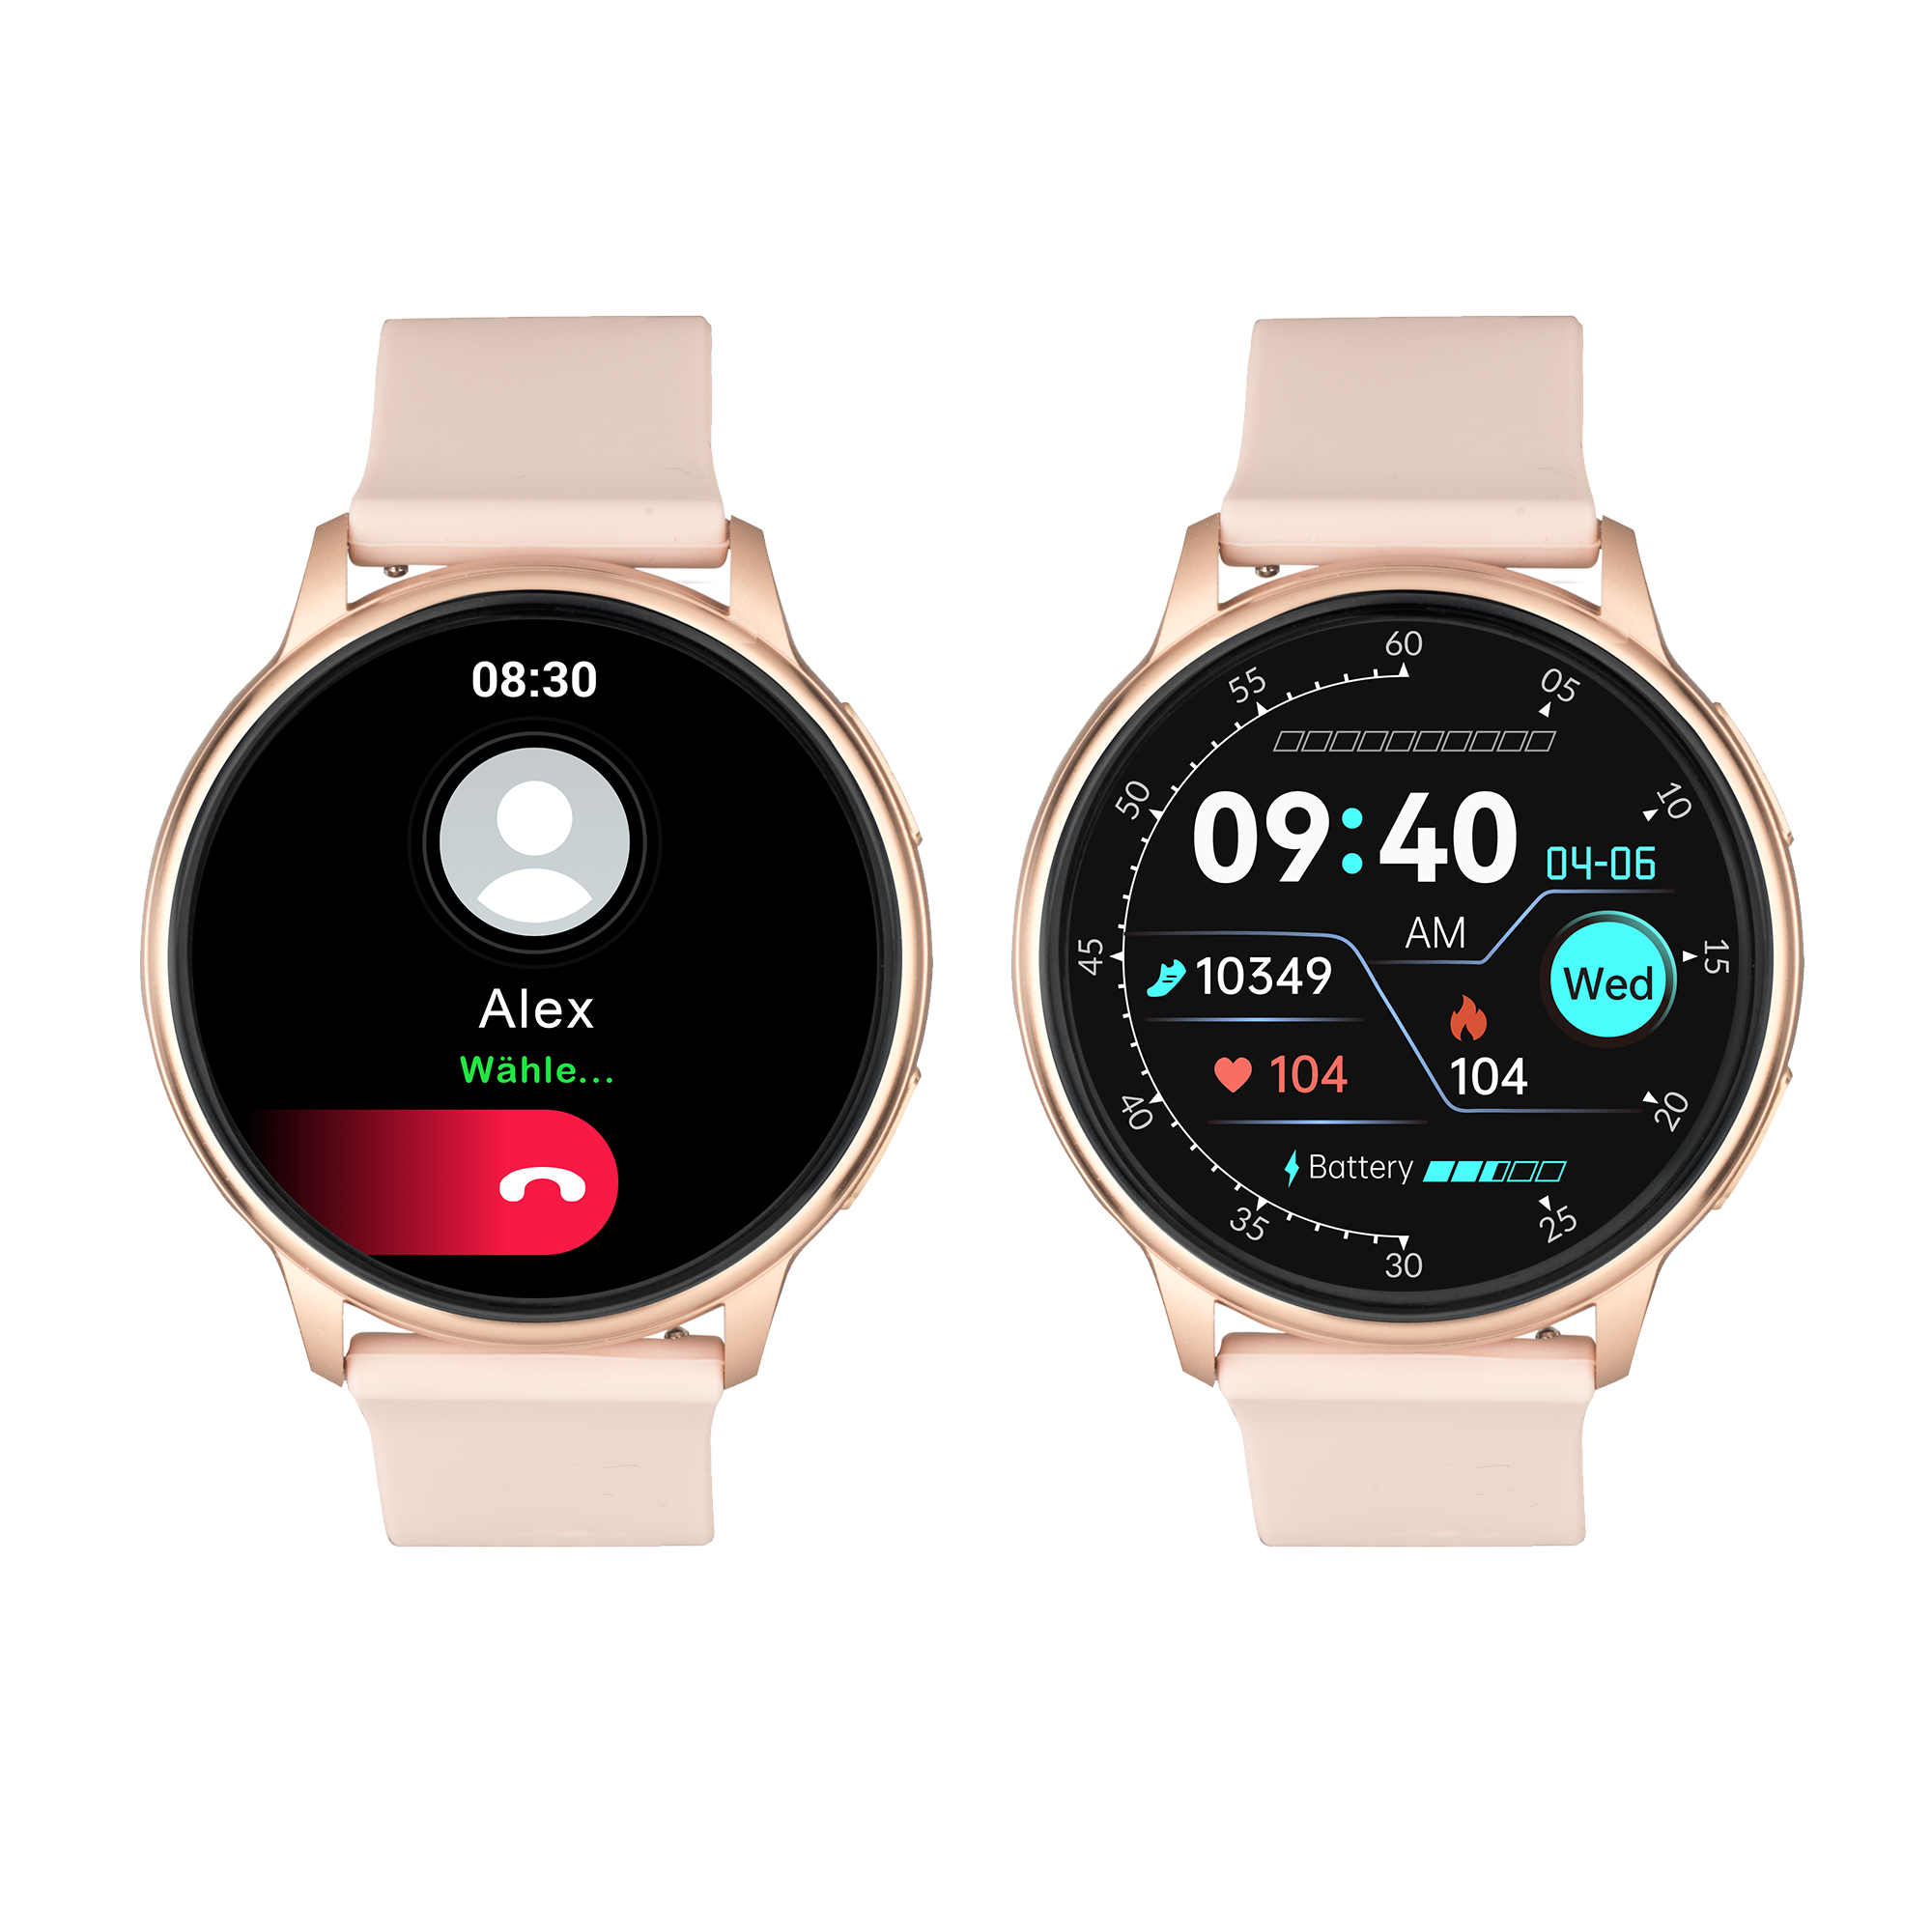 & LEVOWATCH Smartwatch Edelstahlarmband, Aluminium-Rand F2 + Rosa Tel Silikon Temp